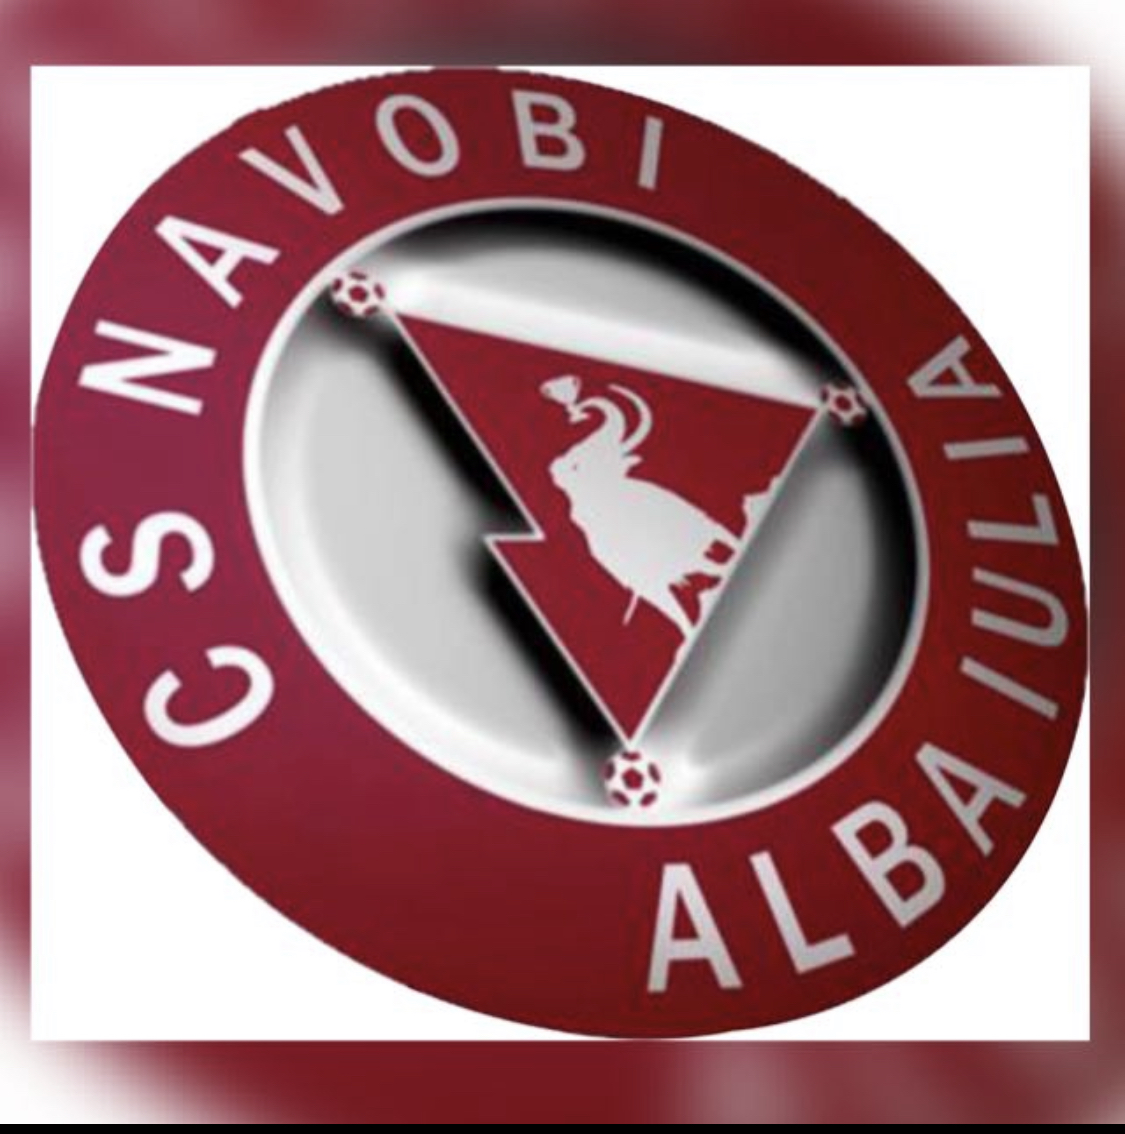 Asociatia “Clubul Sportiv Navobi Alba Iulia” logo